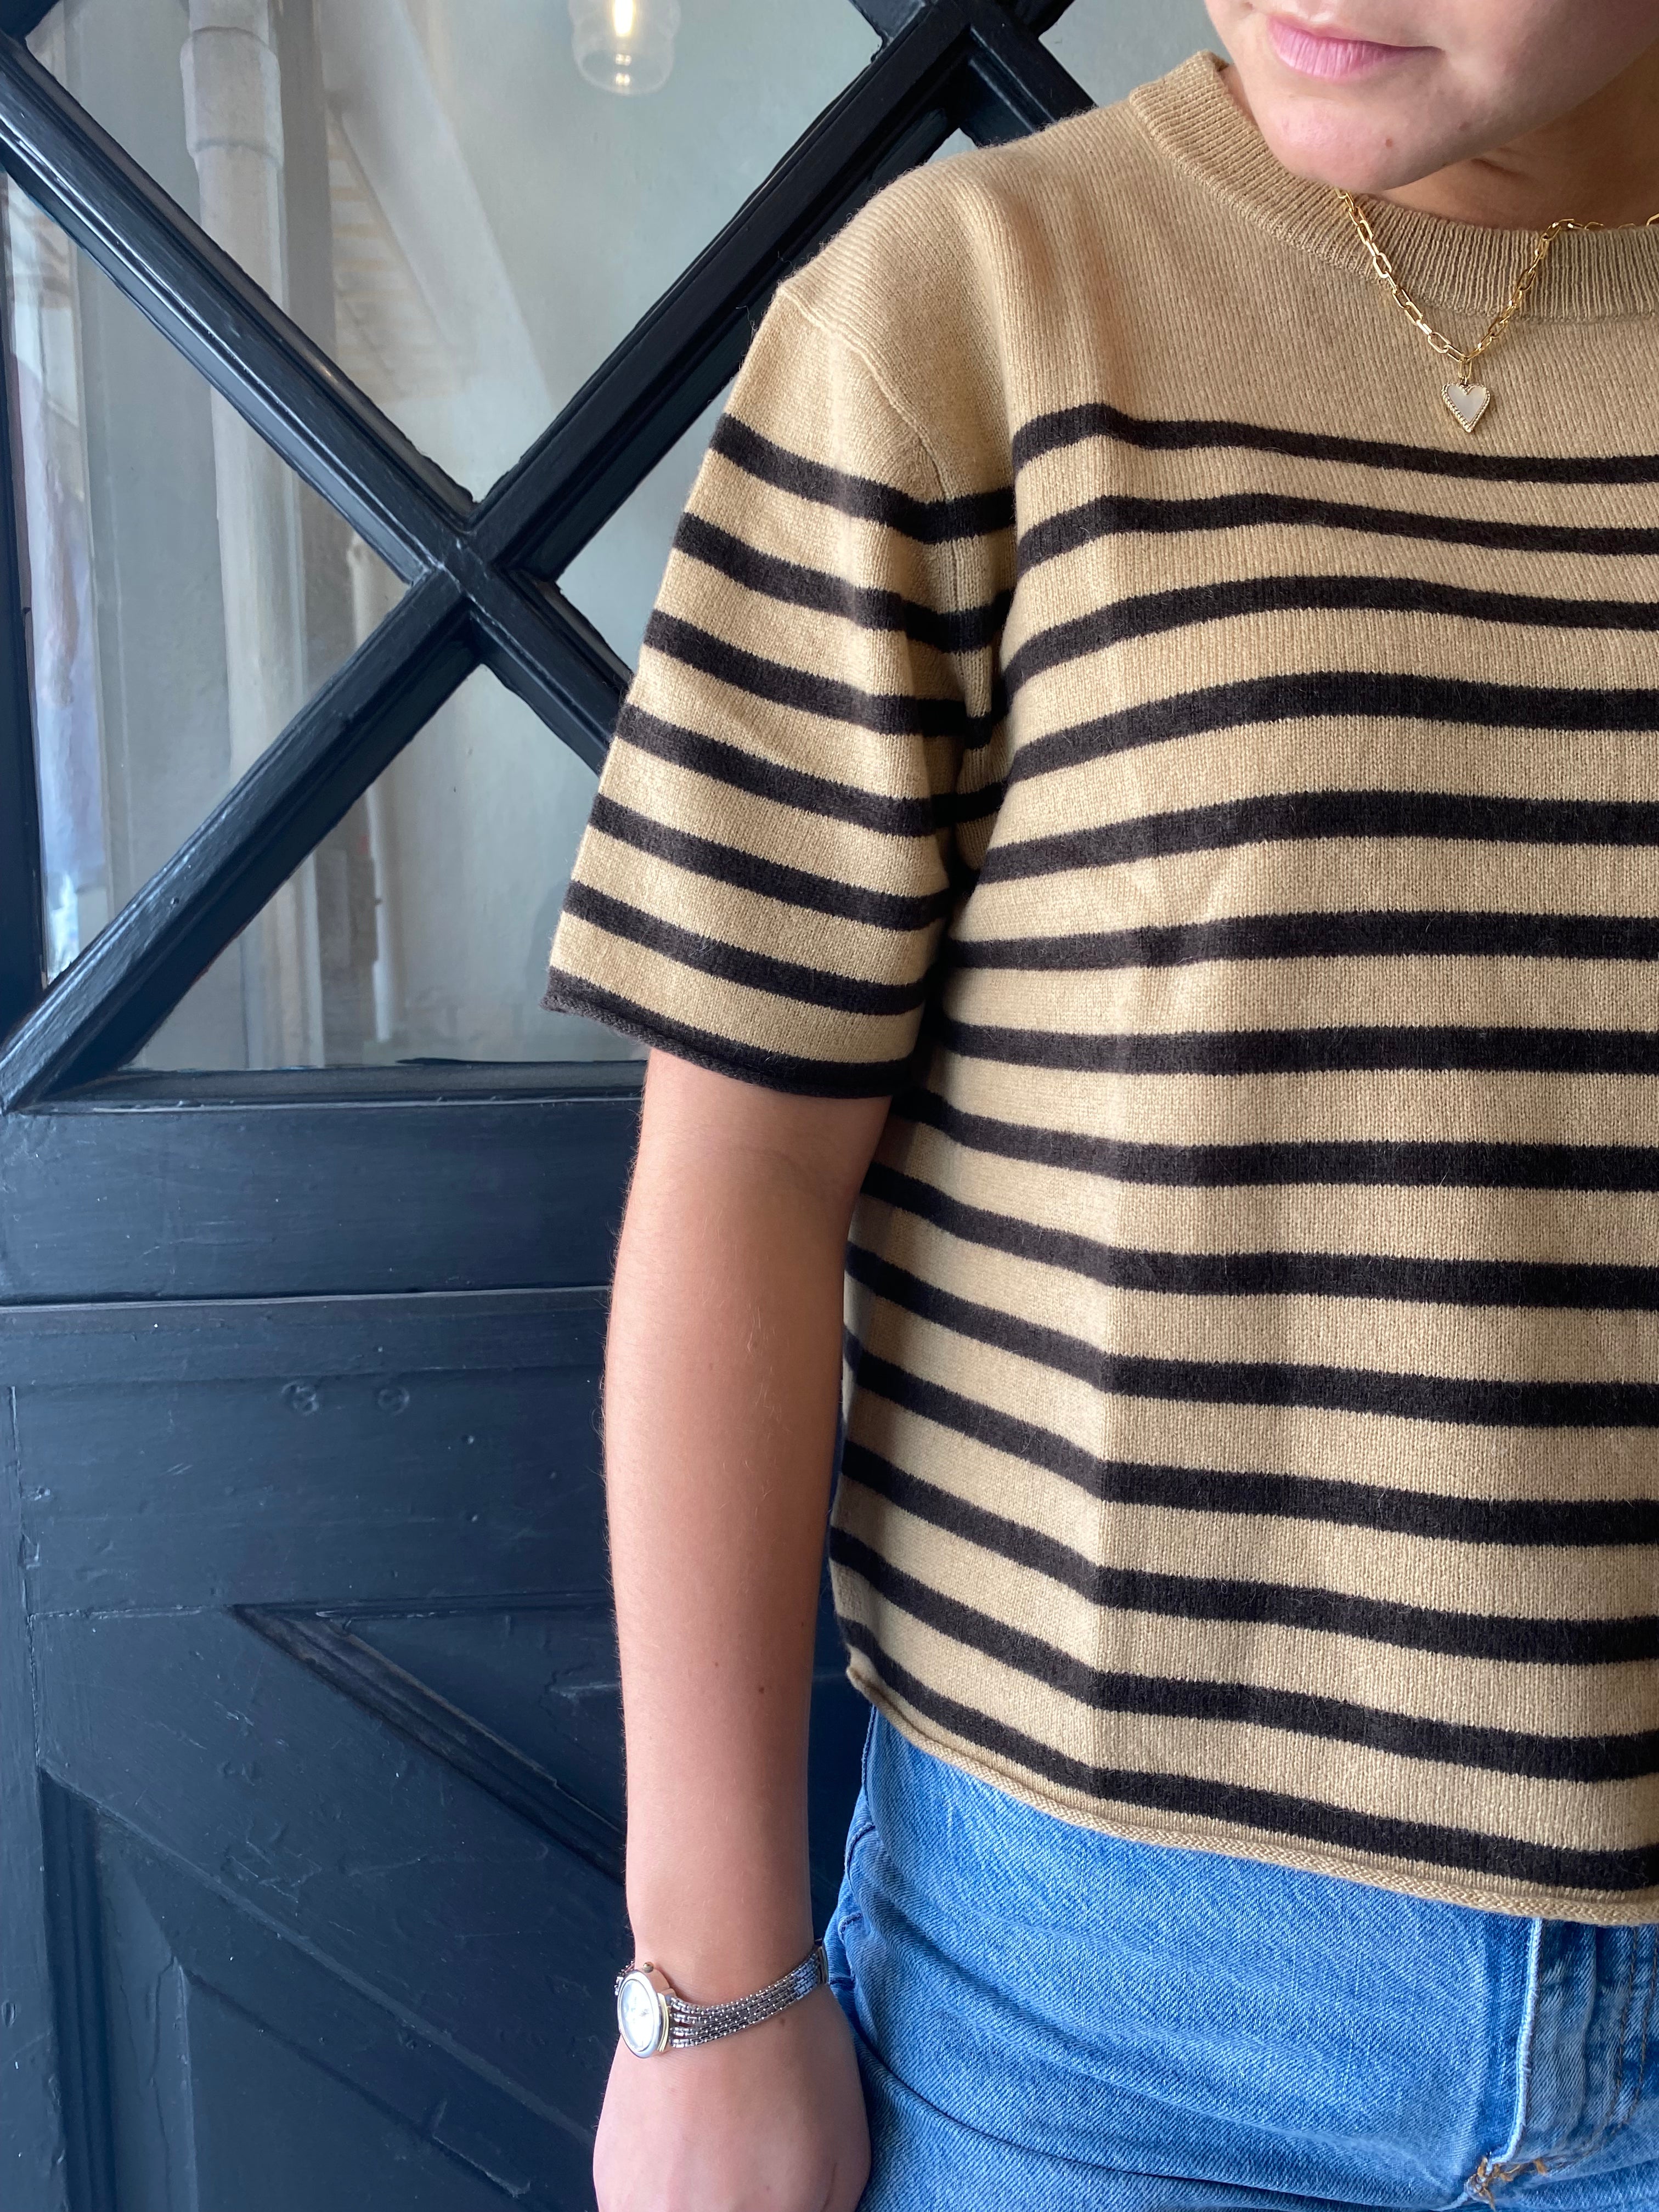 Lisa Yang Cila Cashmere Stripes Tee Shirt